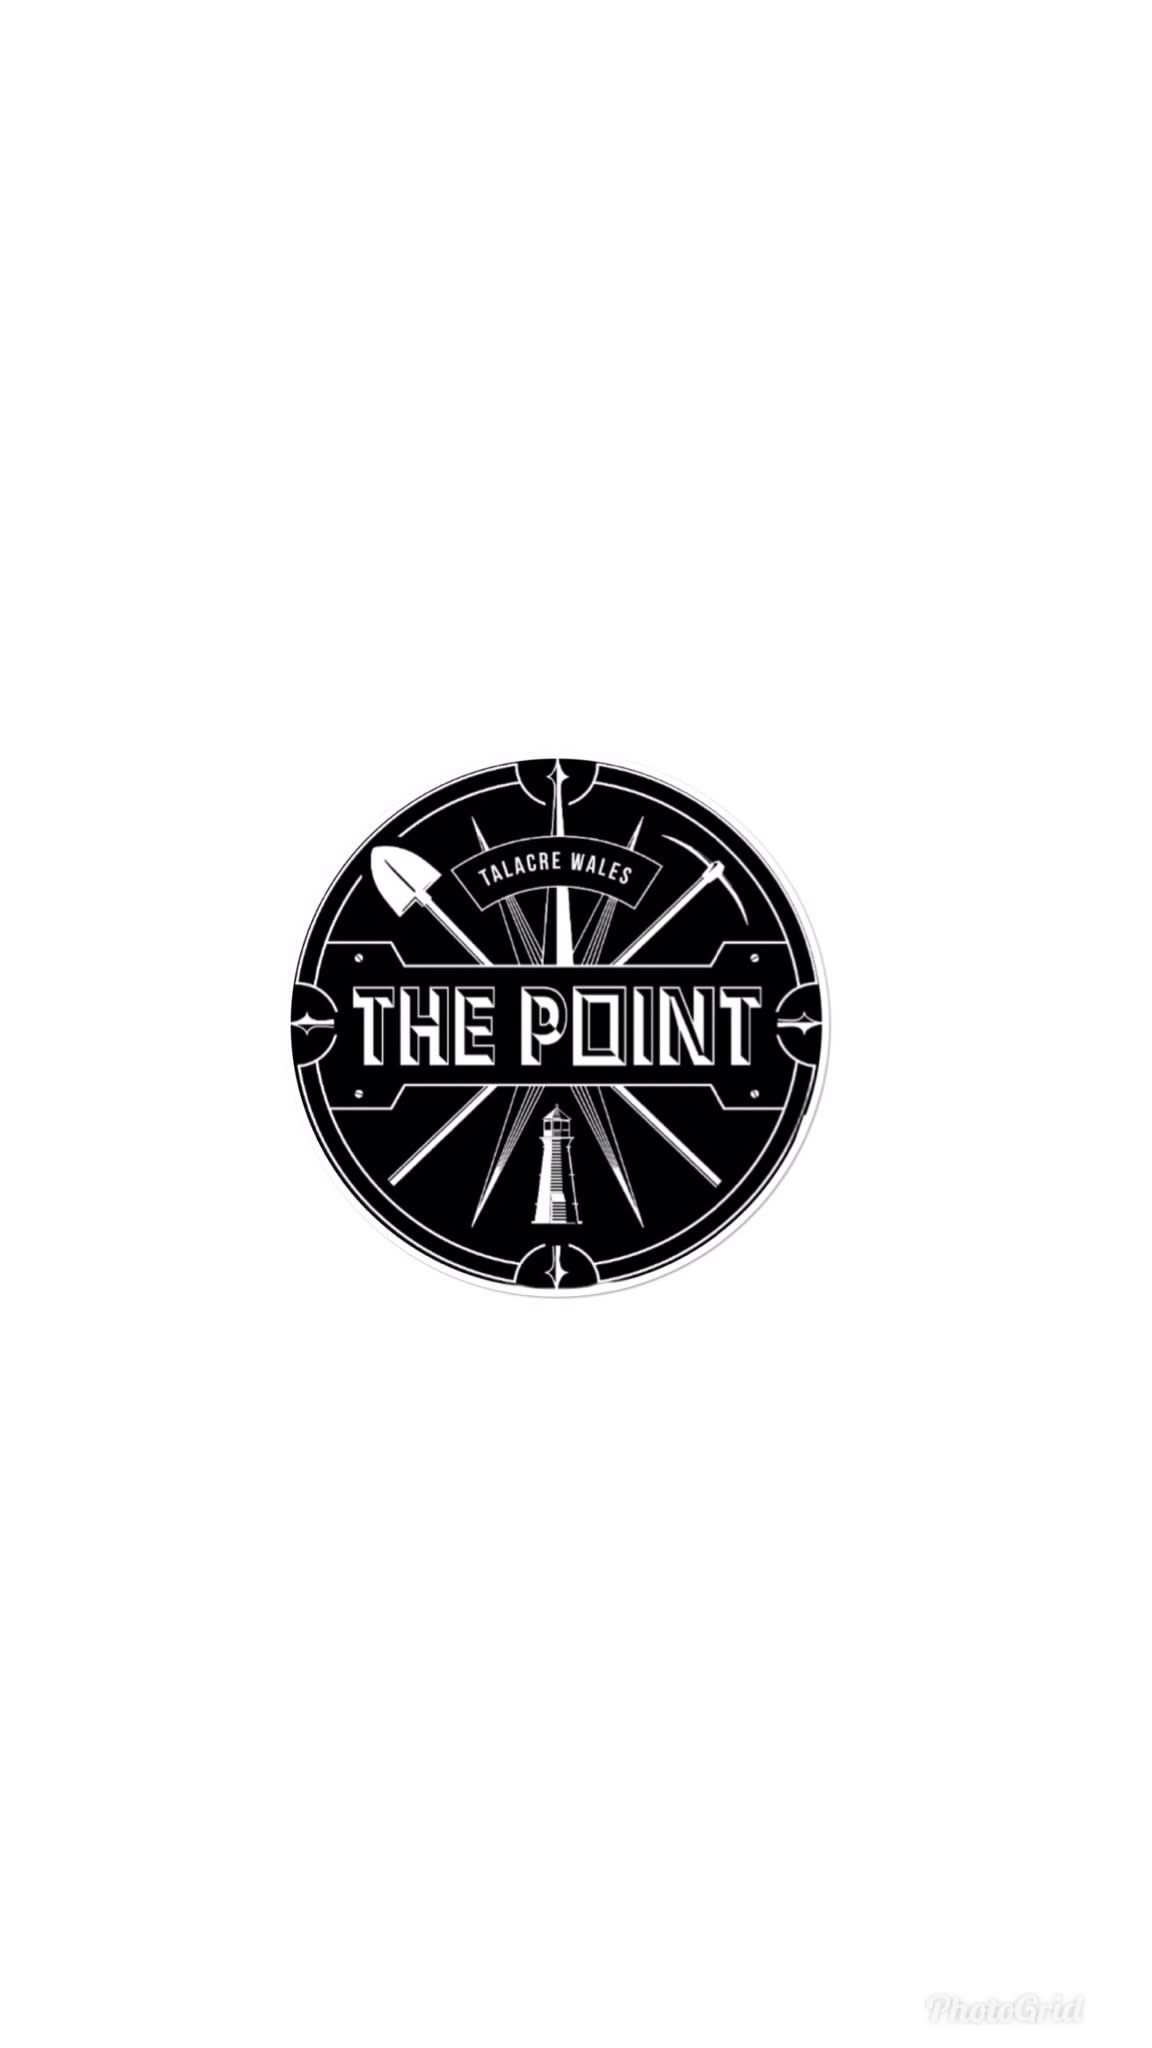 The Point Bar & Restaurant